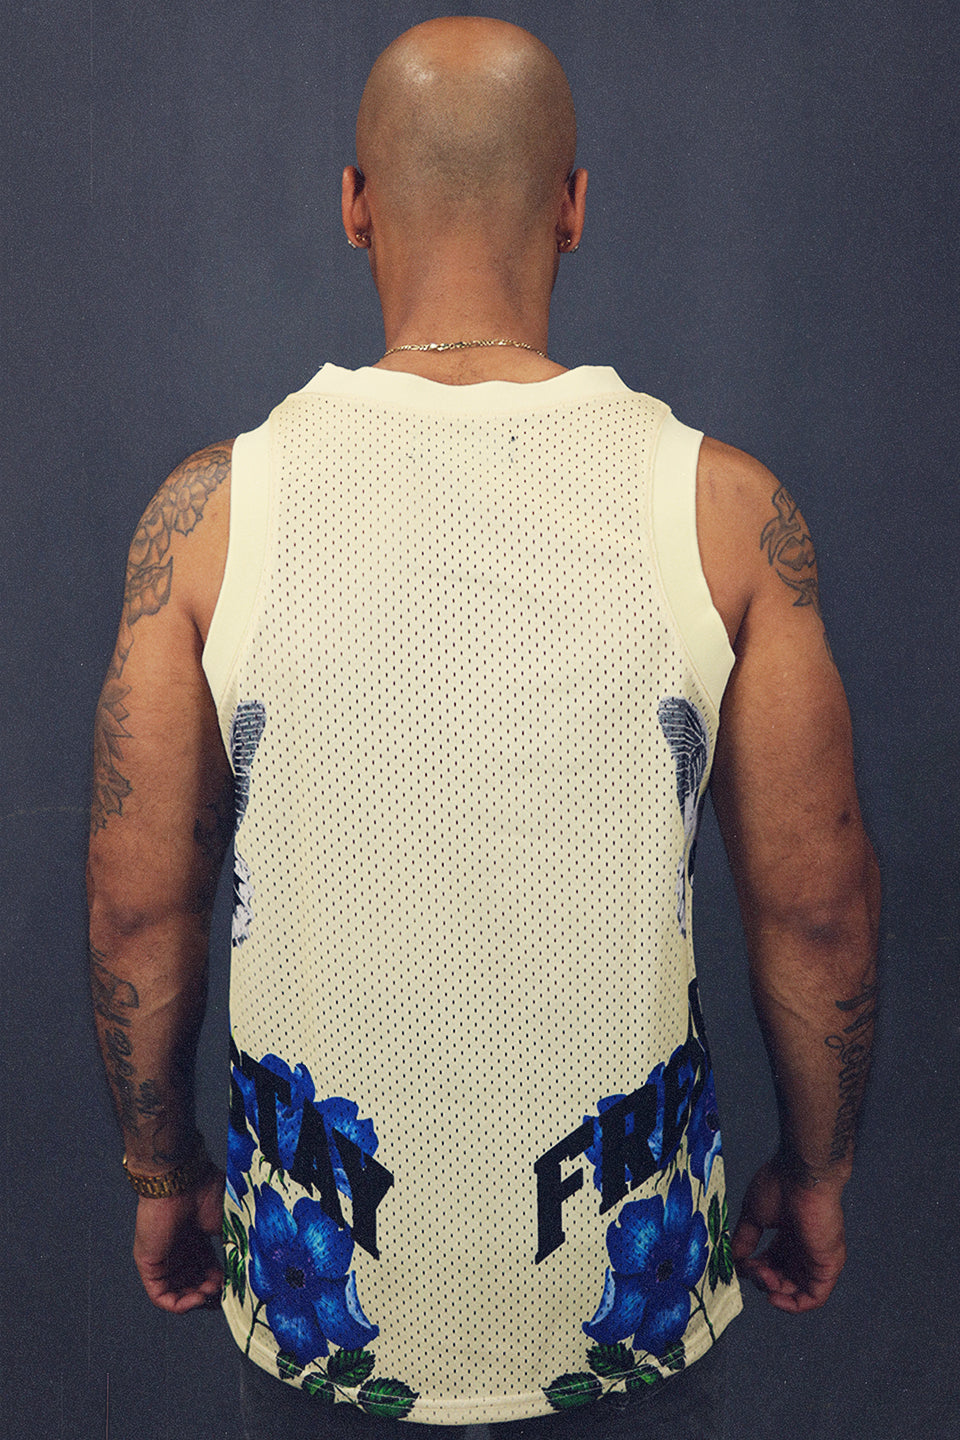 Men's Sleeveless Basketball Shirt Muscle Workout Cream Floral Butterfly Mesh Tank Top back view